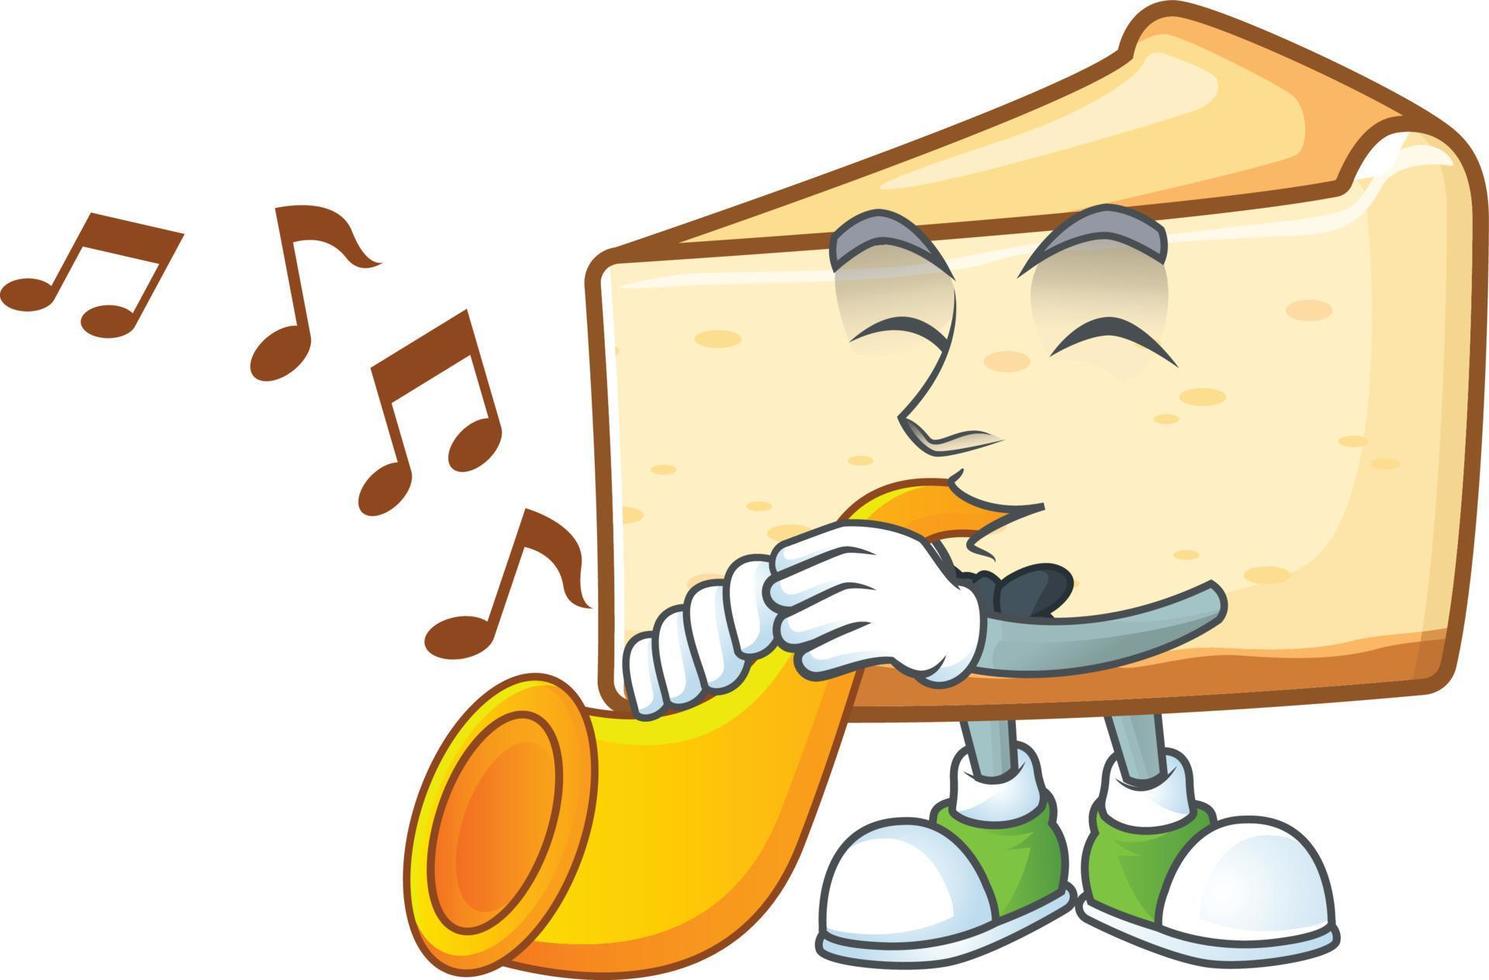 Cheese cake Cartoon character vector